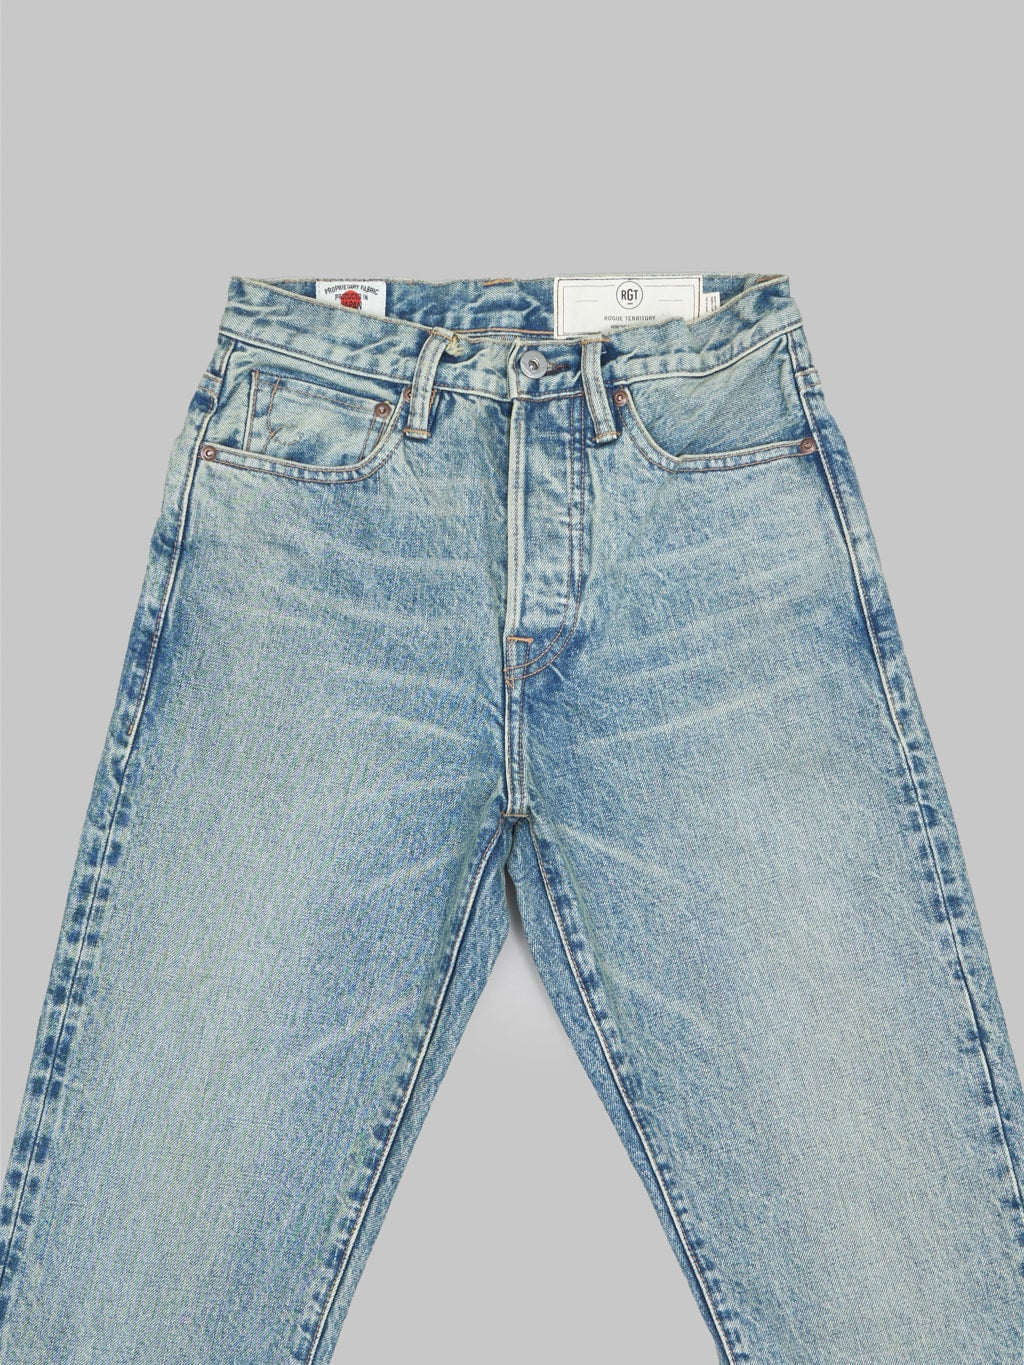 rogue territory strider light indigo wash selvedge jeans front details